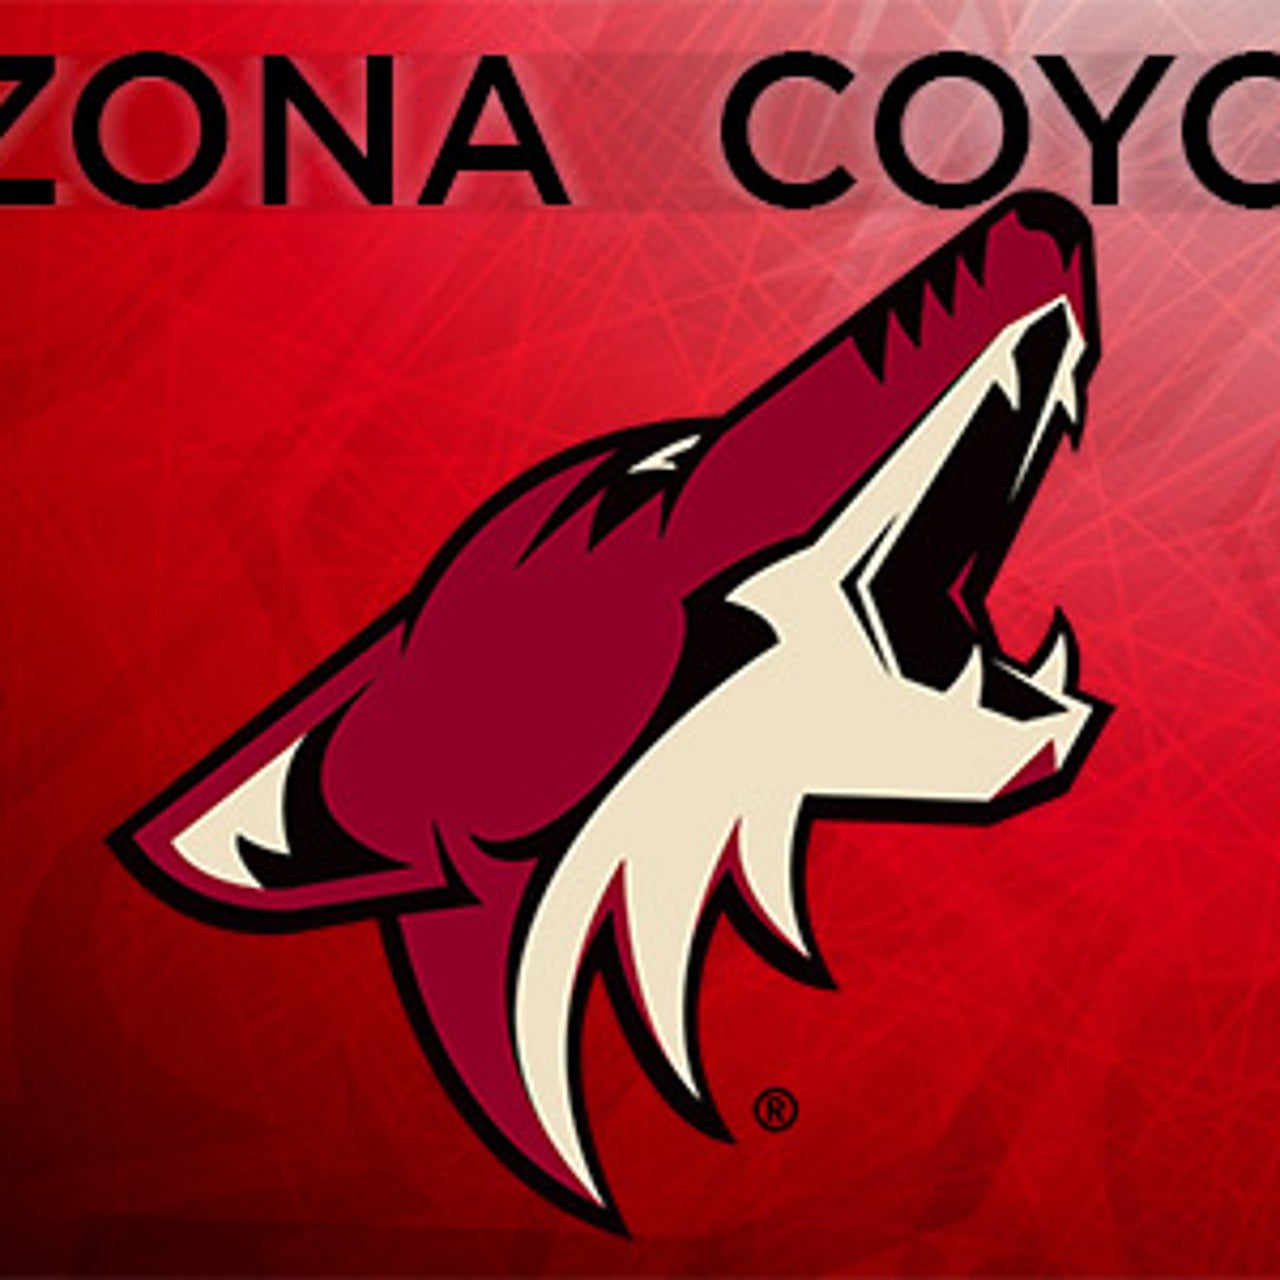 Gila River Receives Branding on Arizona Coyotes Home Jerseys